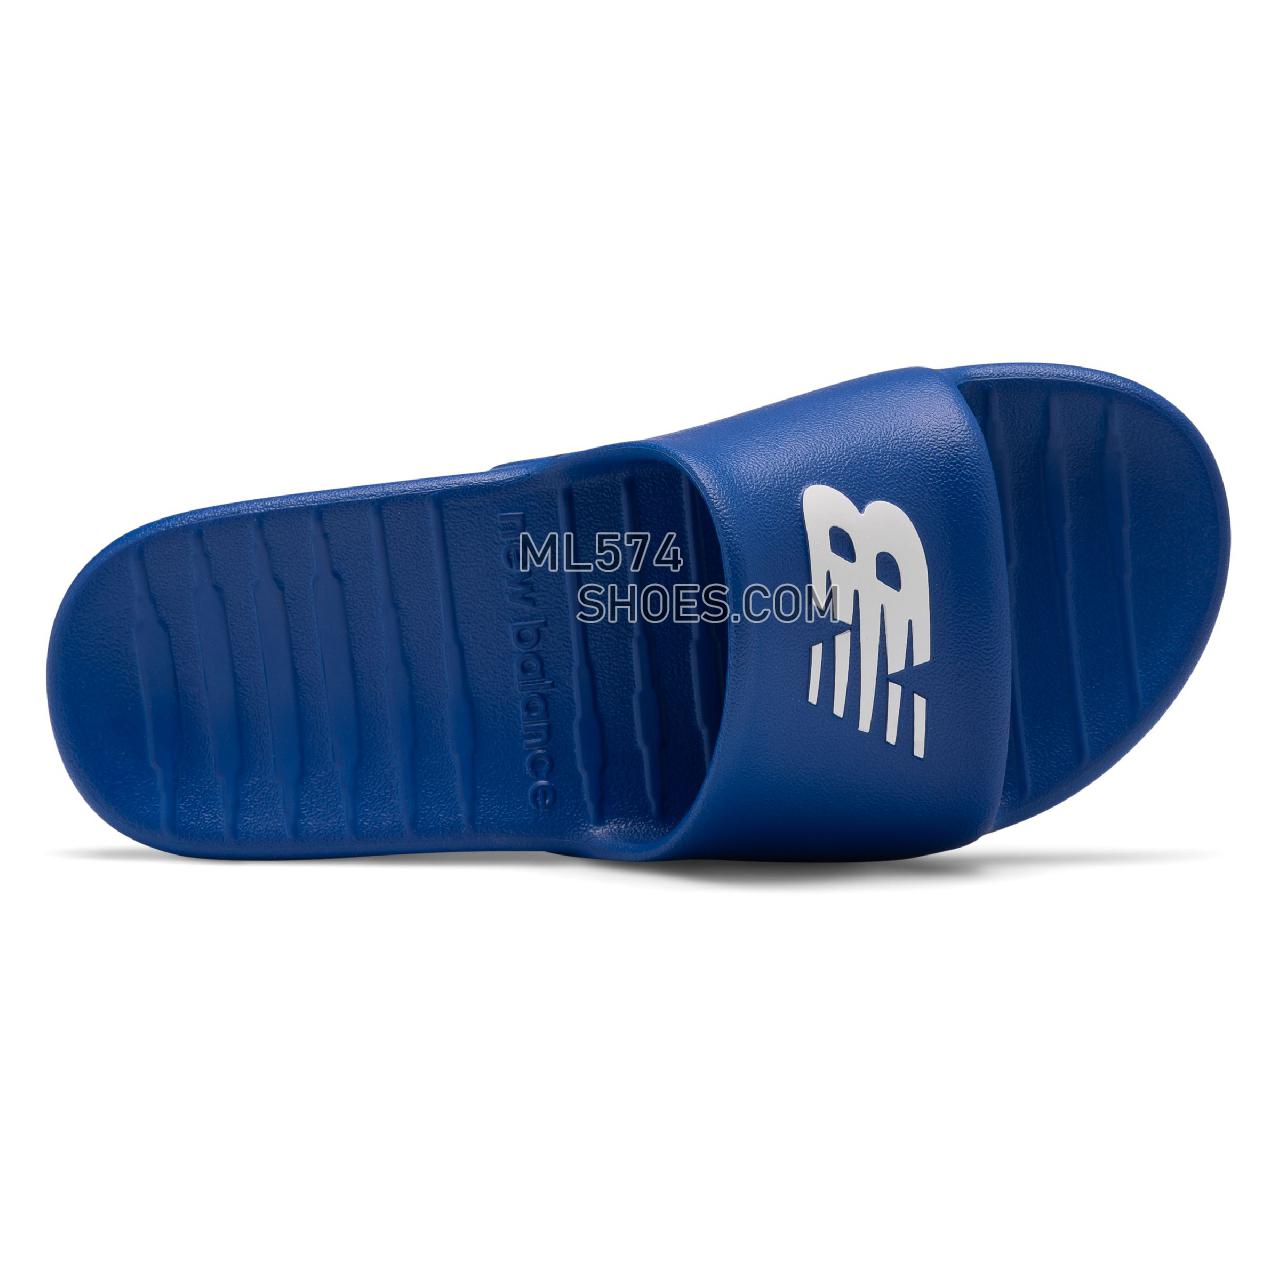 New Balance 100 - Men's Flip Flops - Team Blue with White - SUF100TB